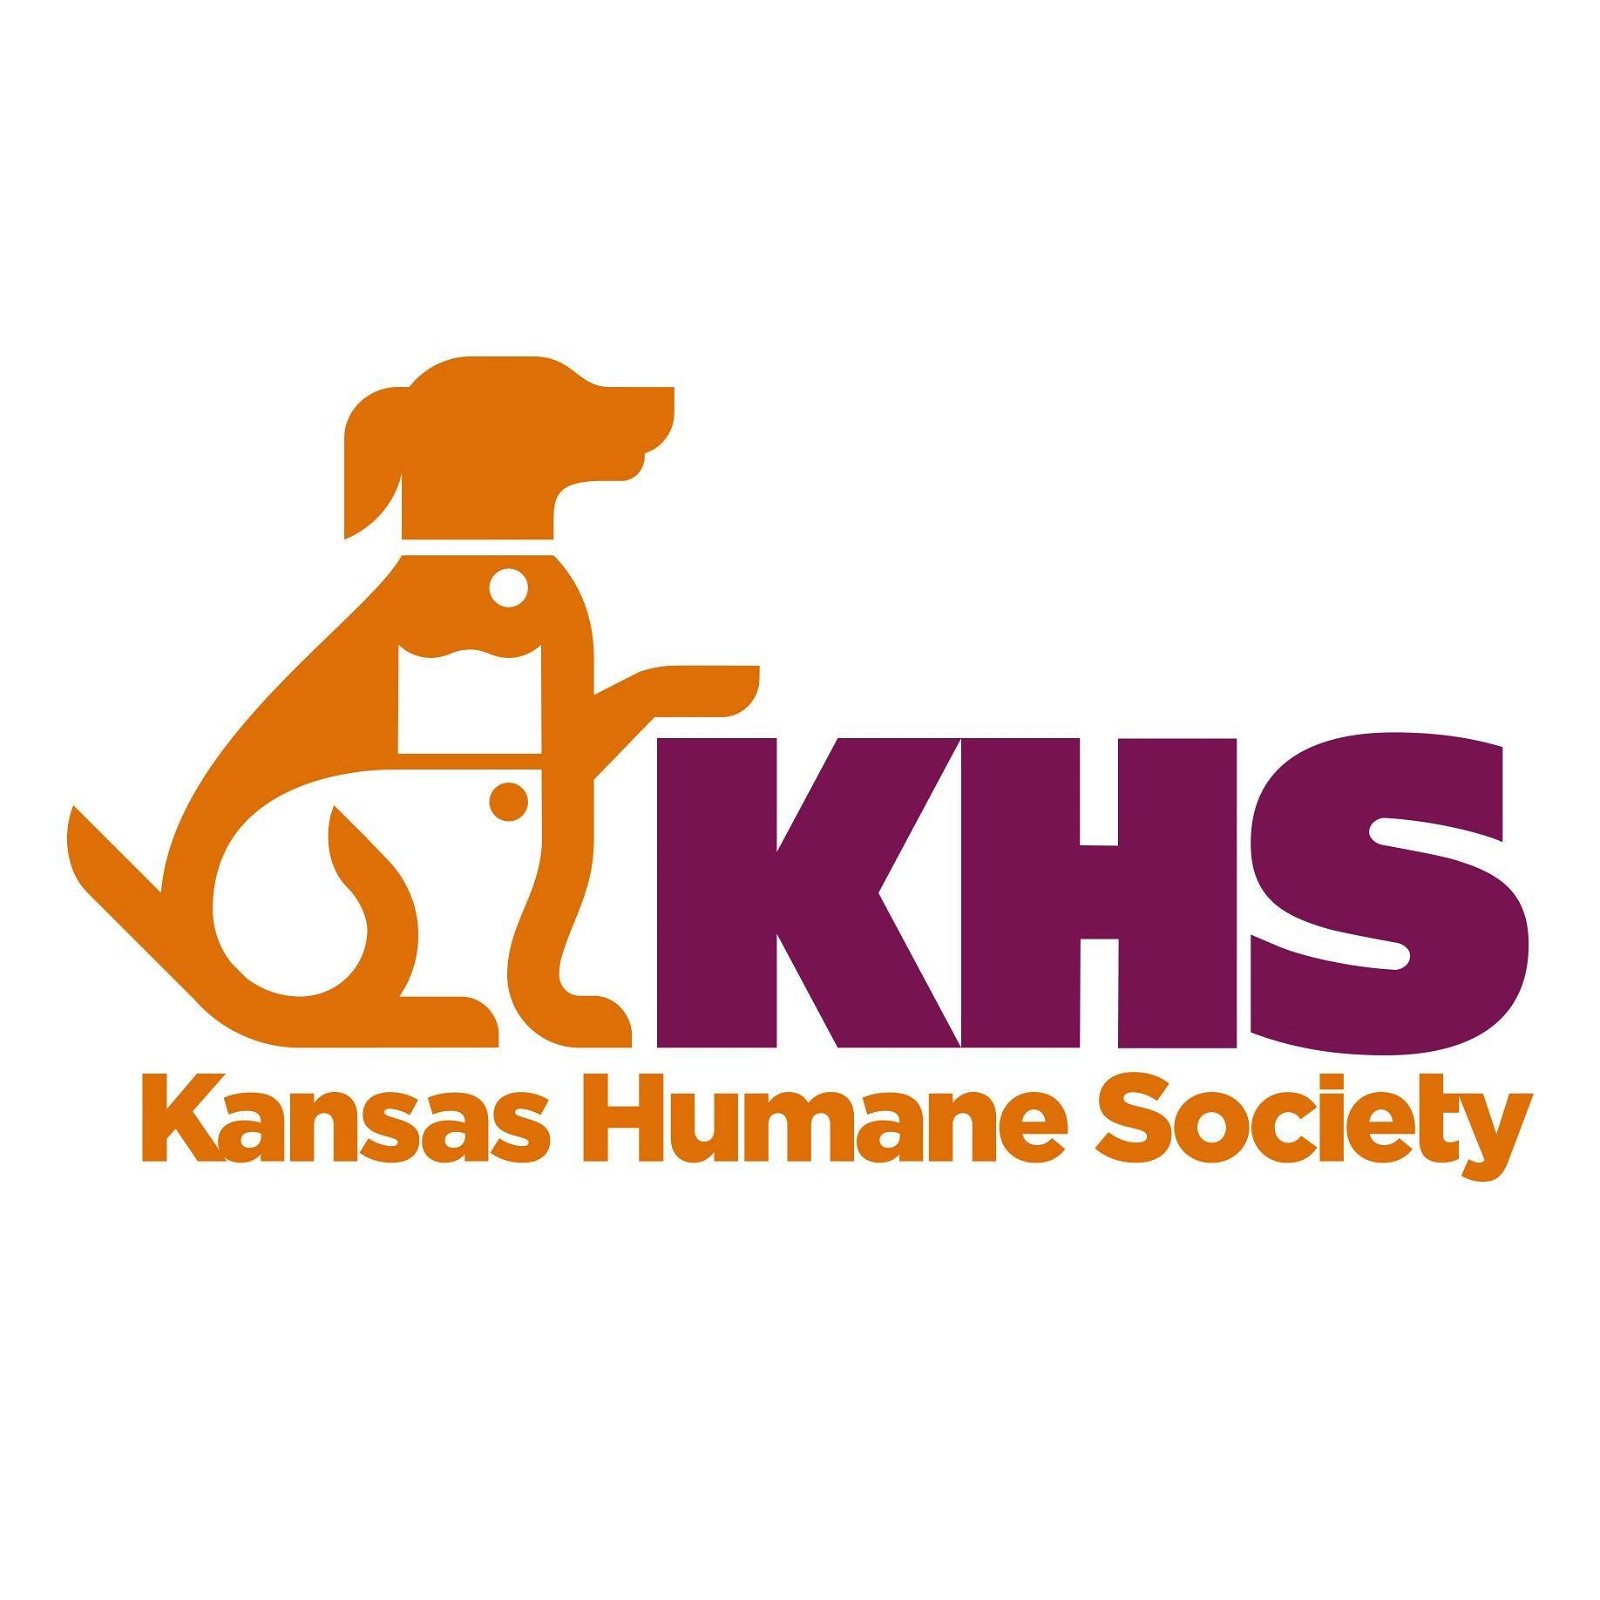 Kansas Humane Society (KHS) in Wichita